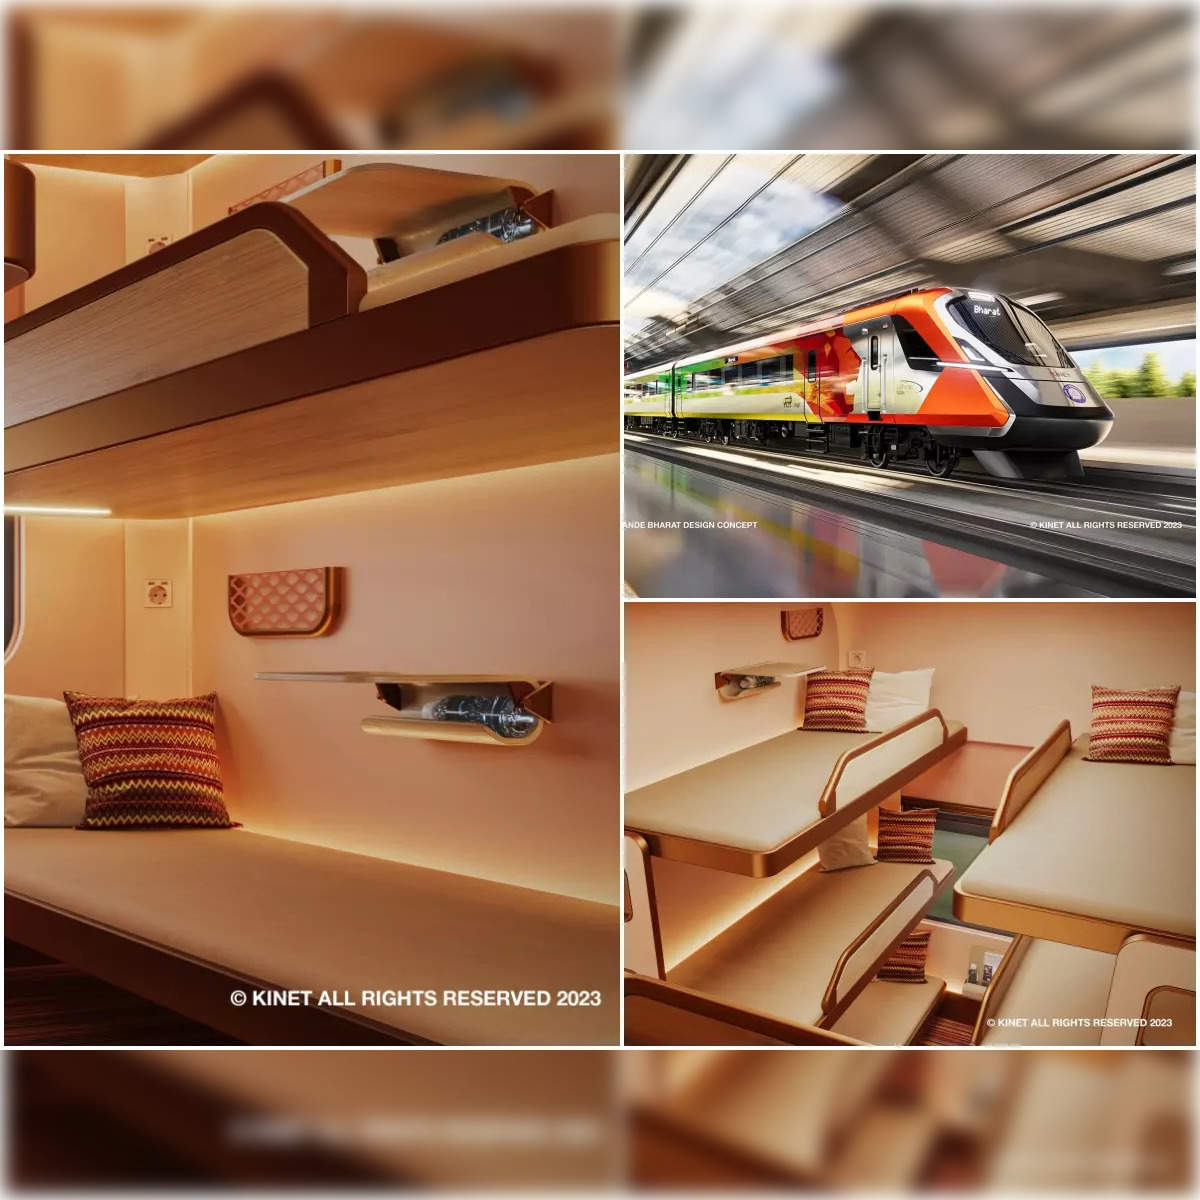 Vande Bharat Sleeper Train: Railway Minister Ashwini Vaishnaw